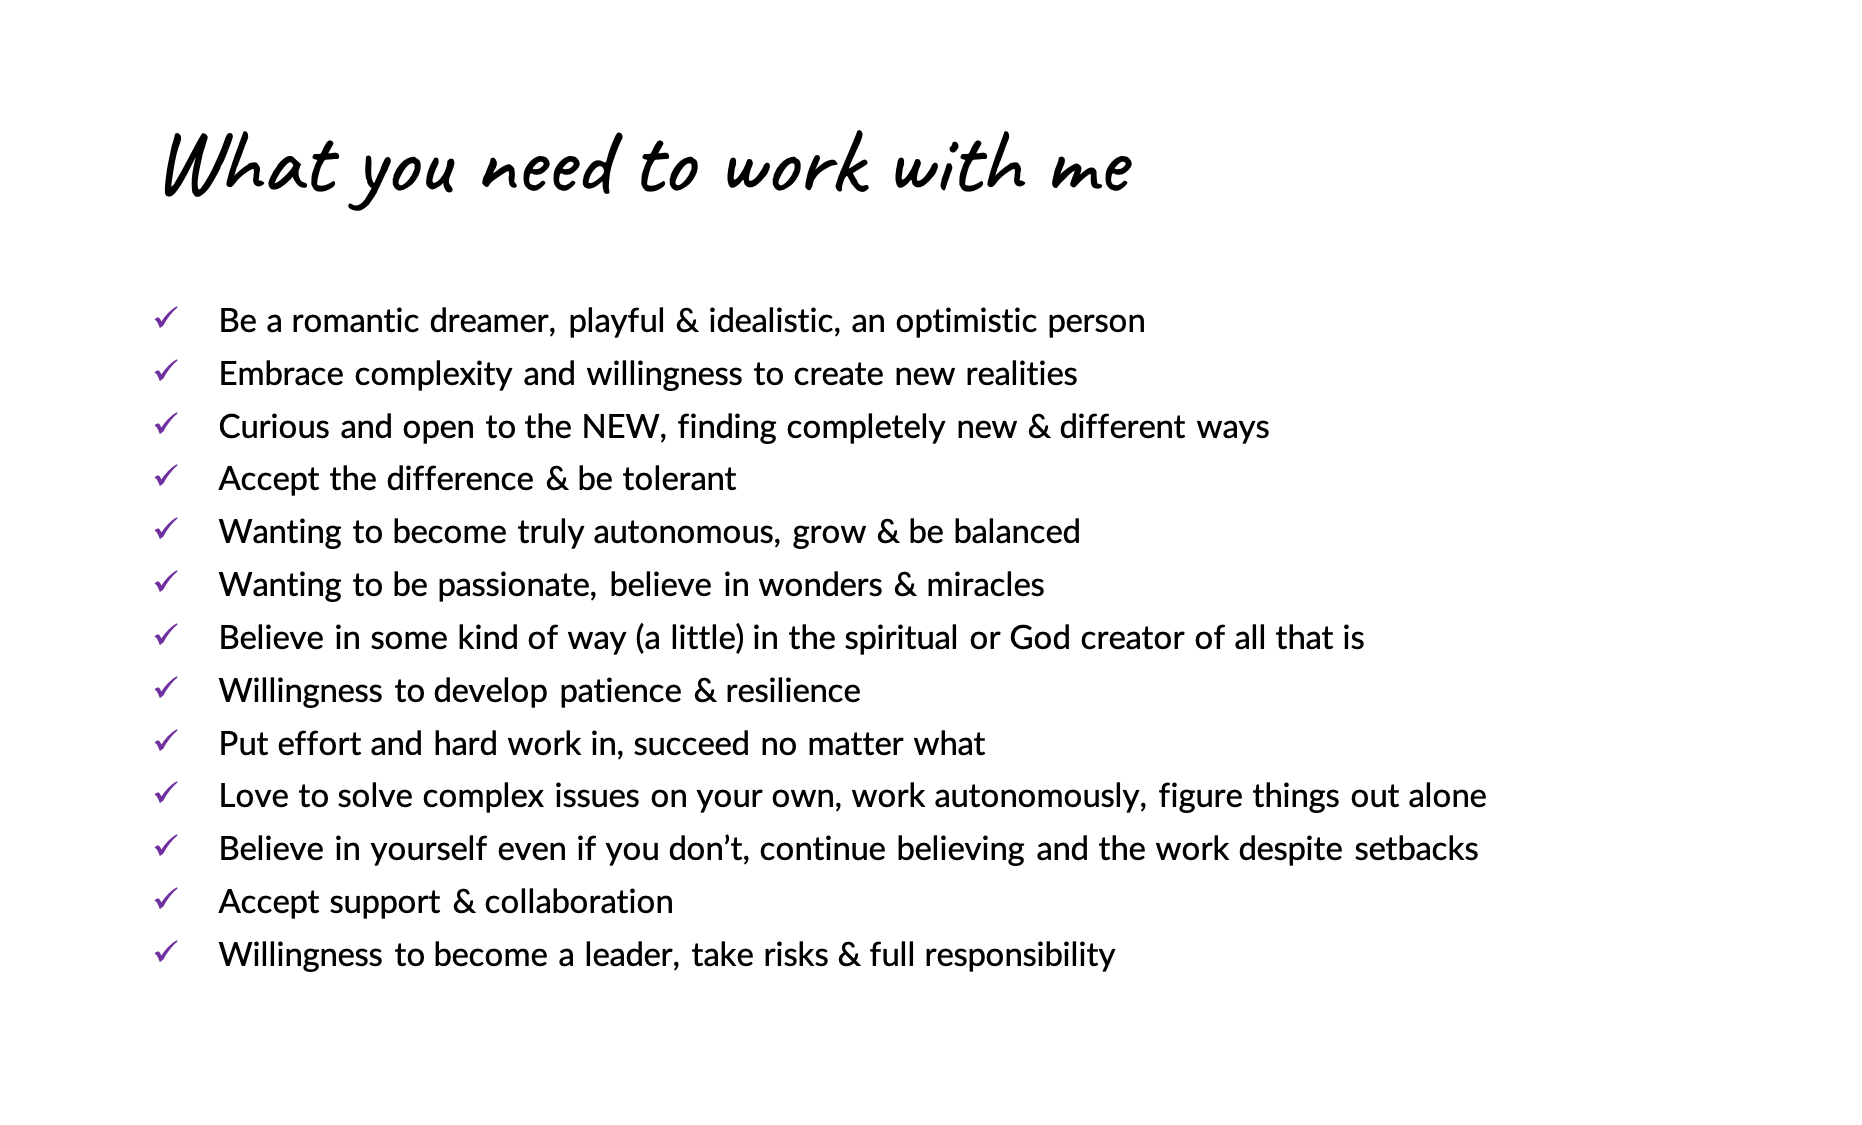 What you need when working with me_spiritual awakening